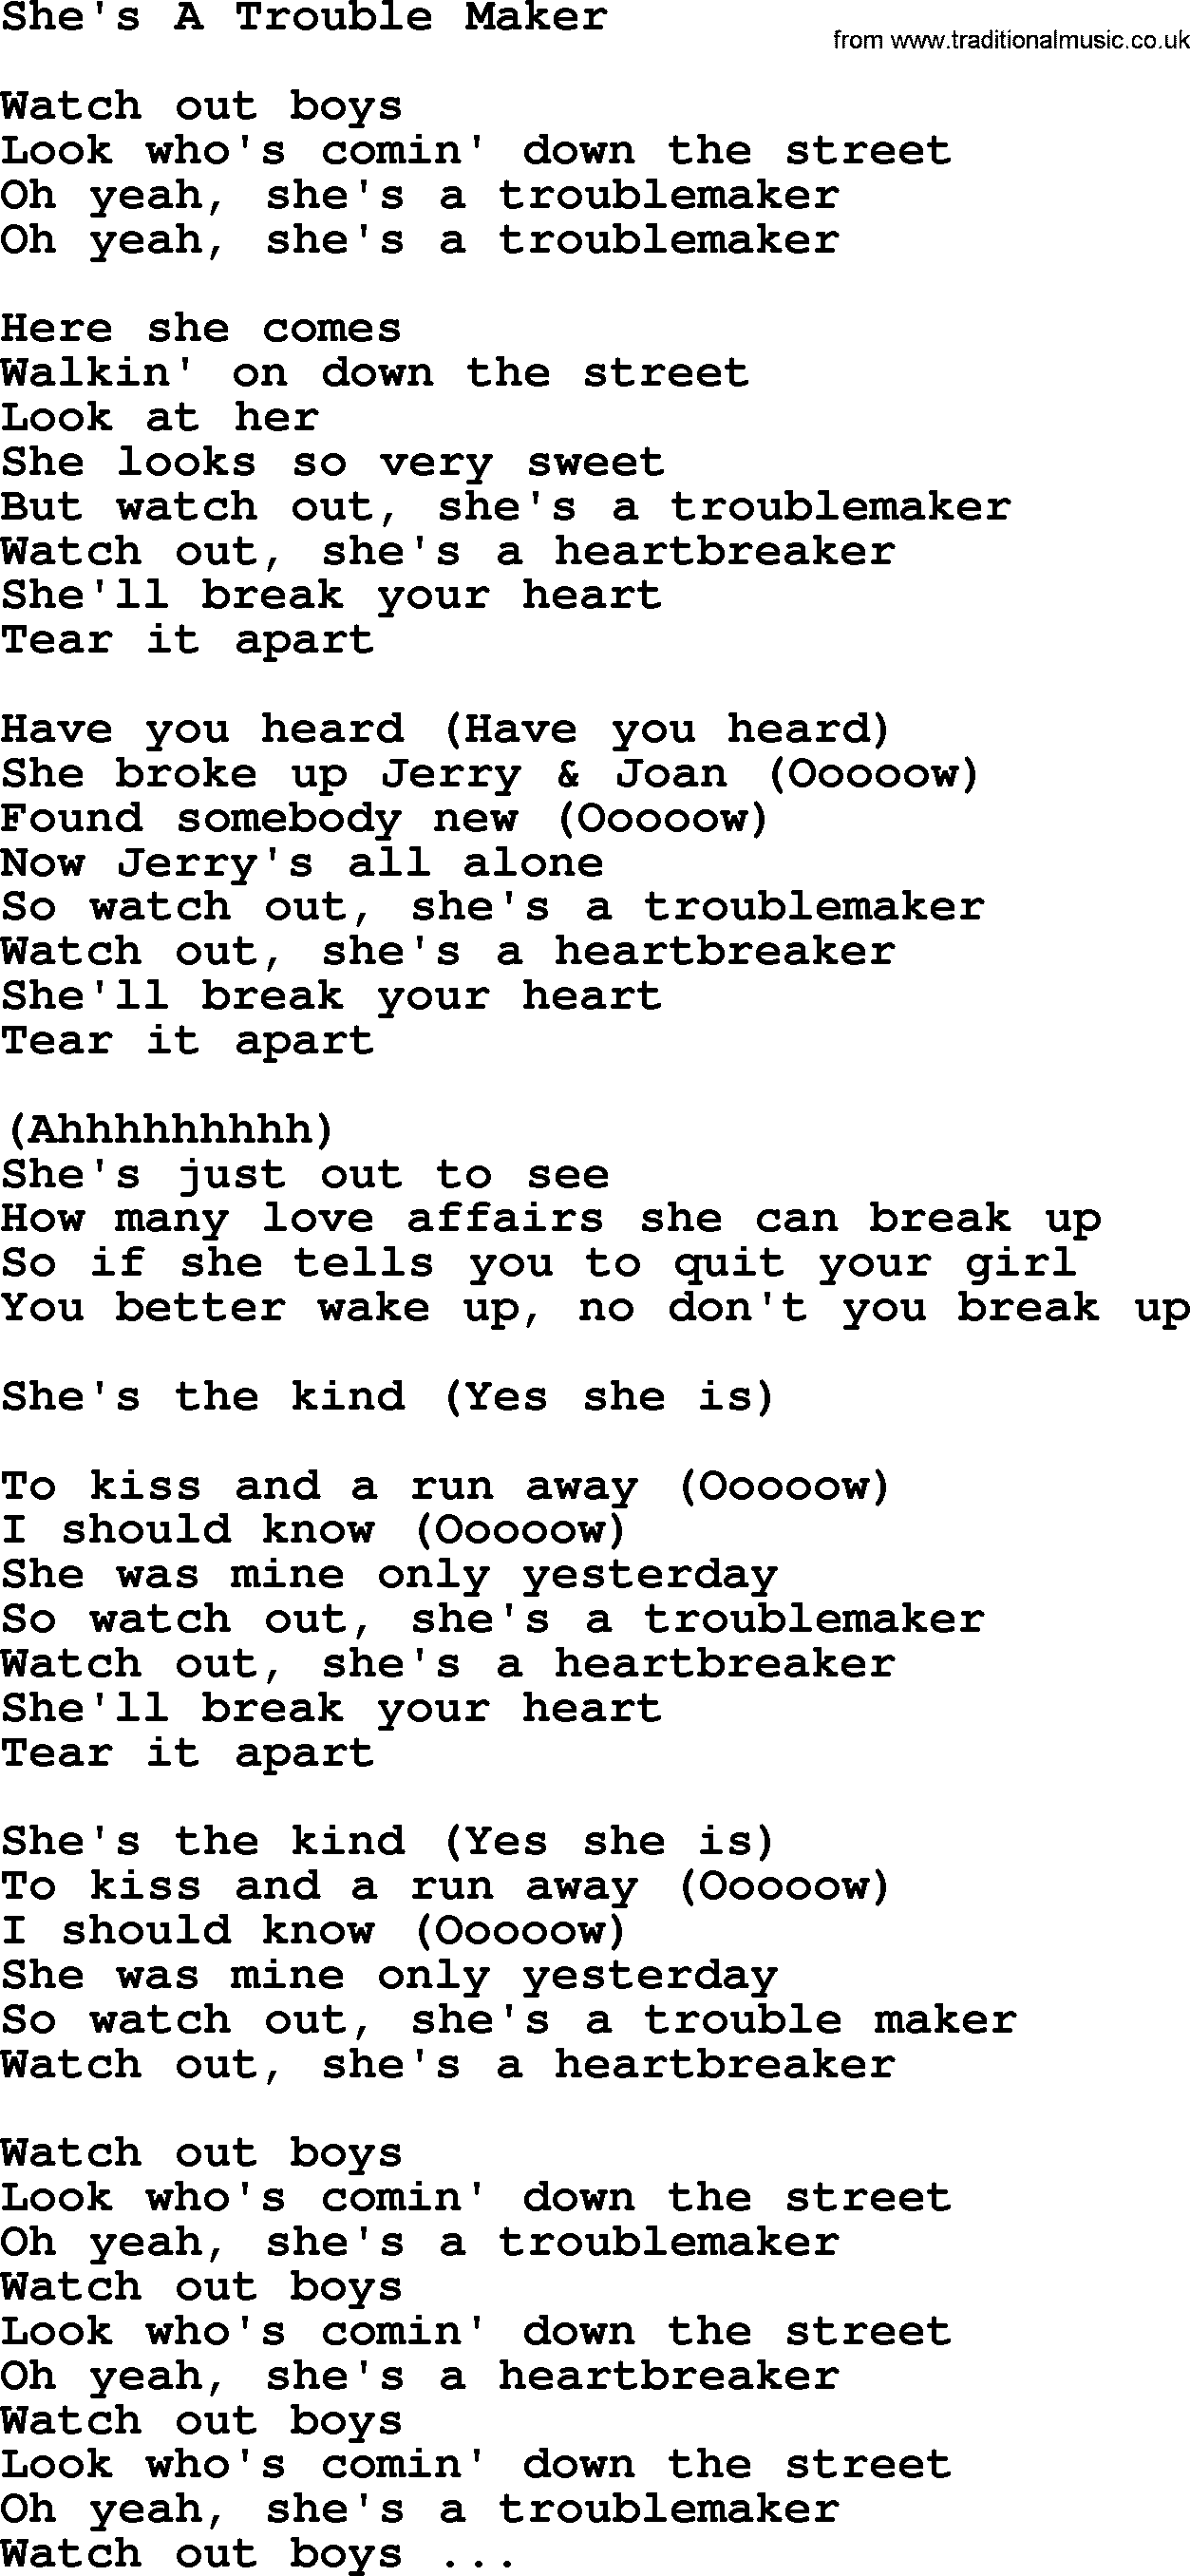 Joan Baez song She's A Trouble Maker, lyrics